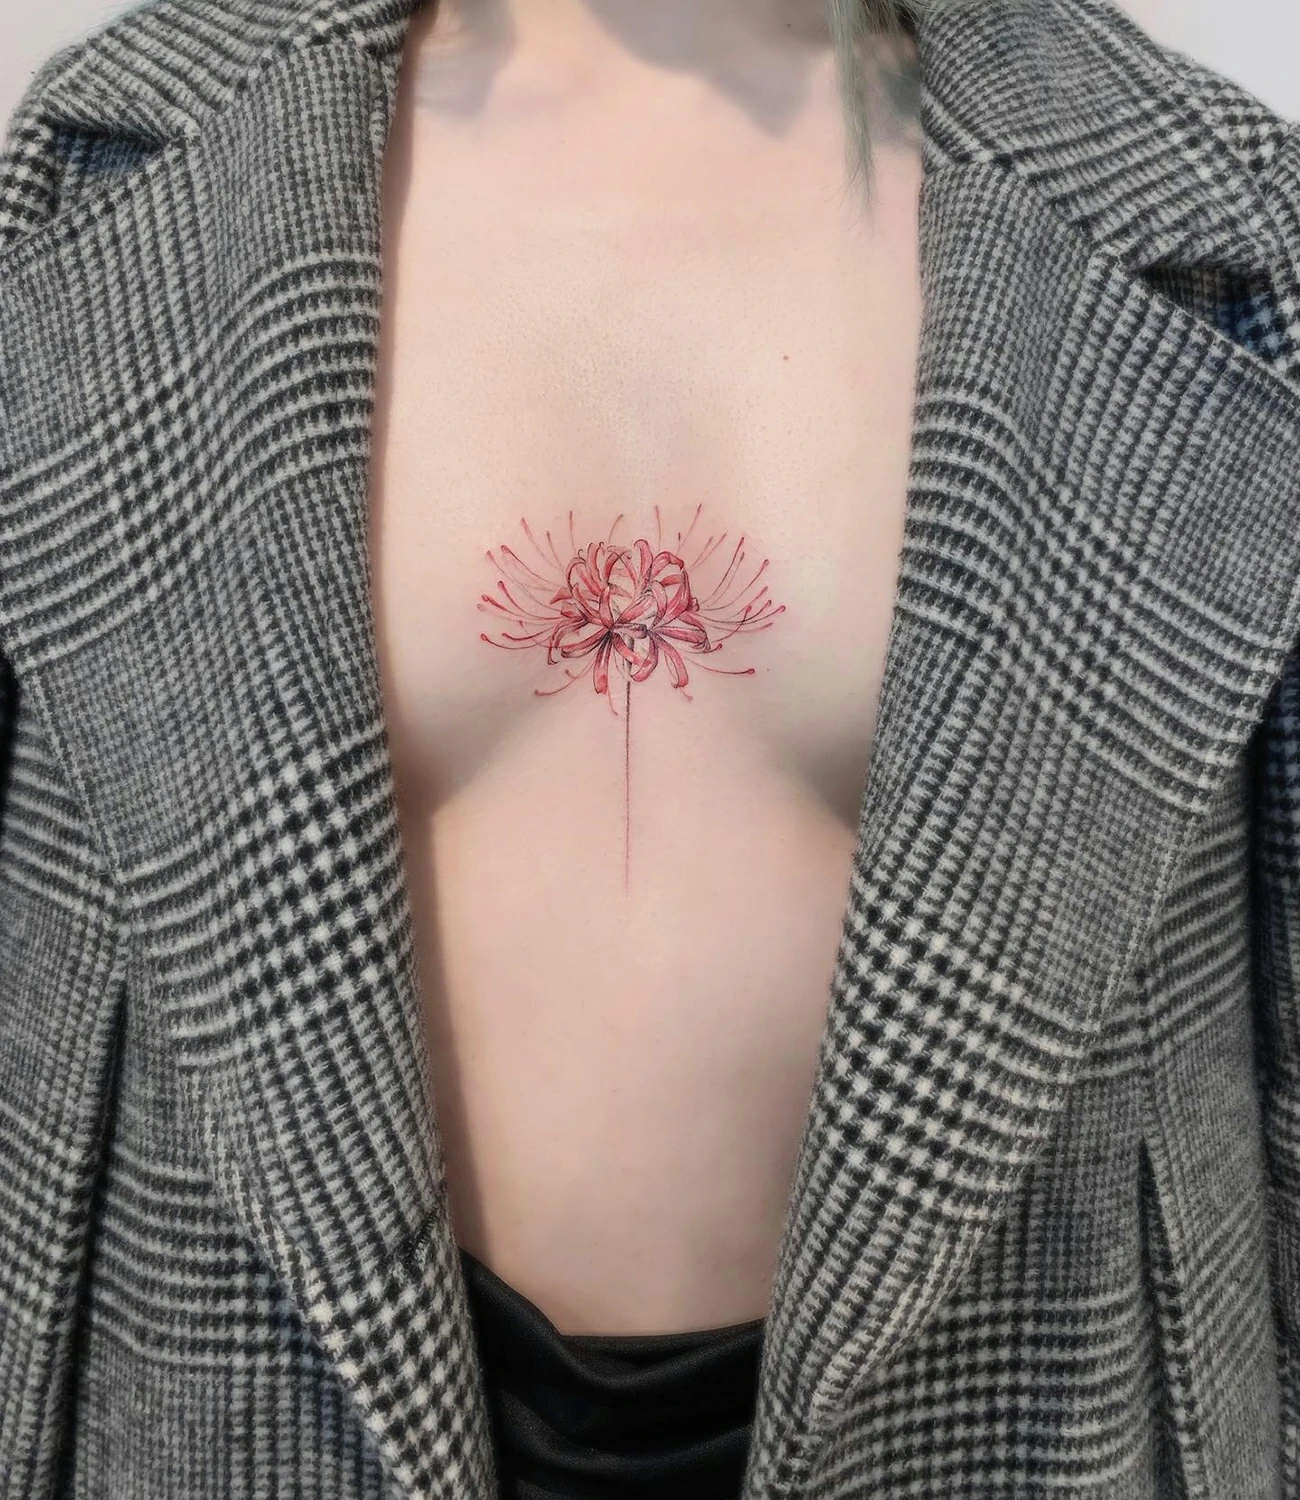 Spider lily tattoo